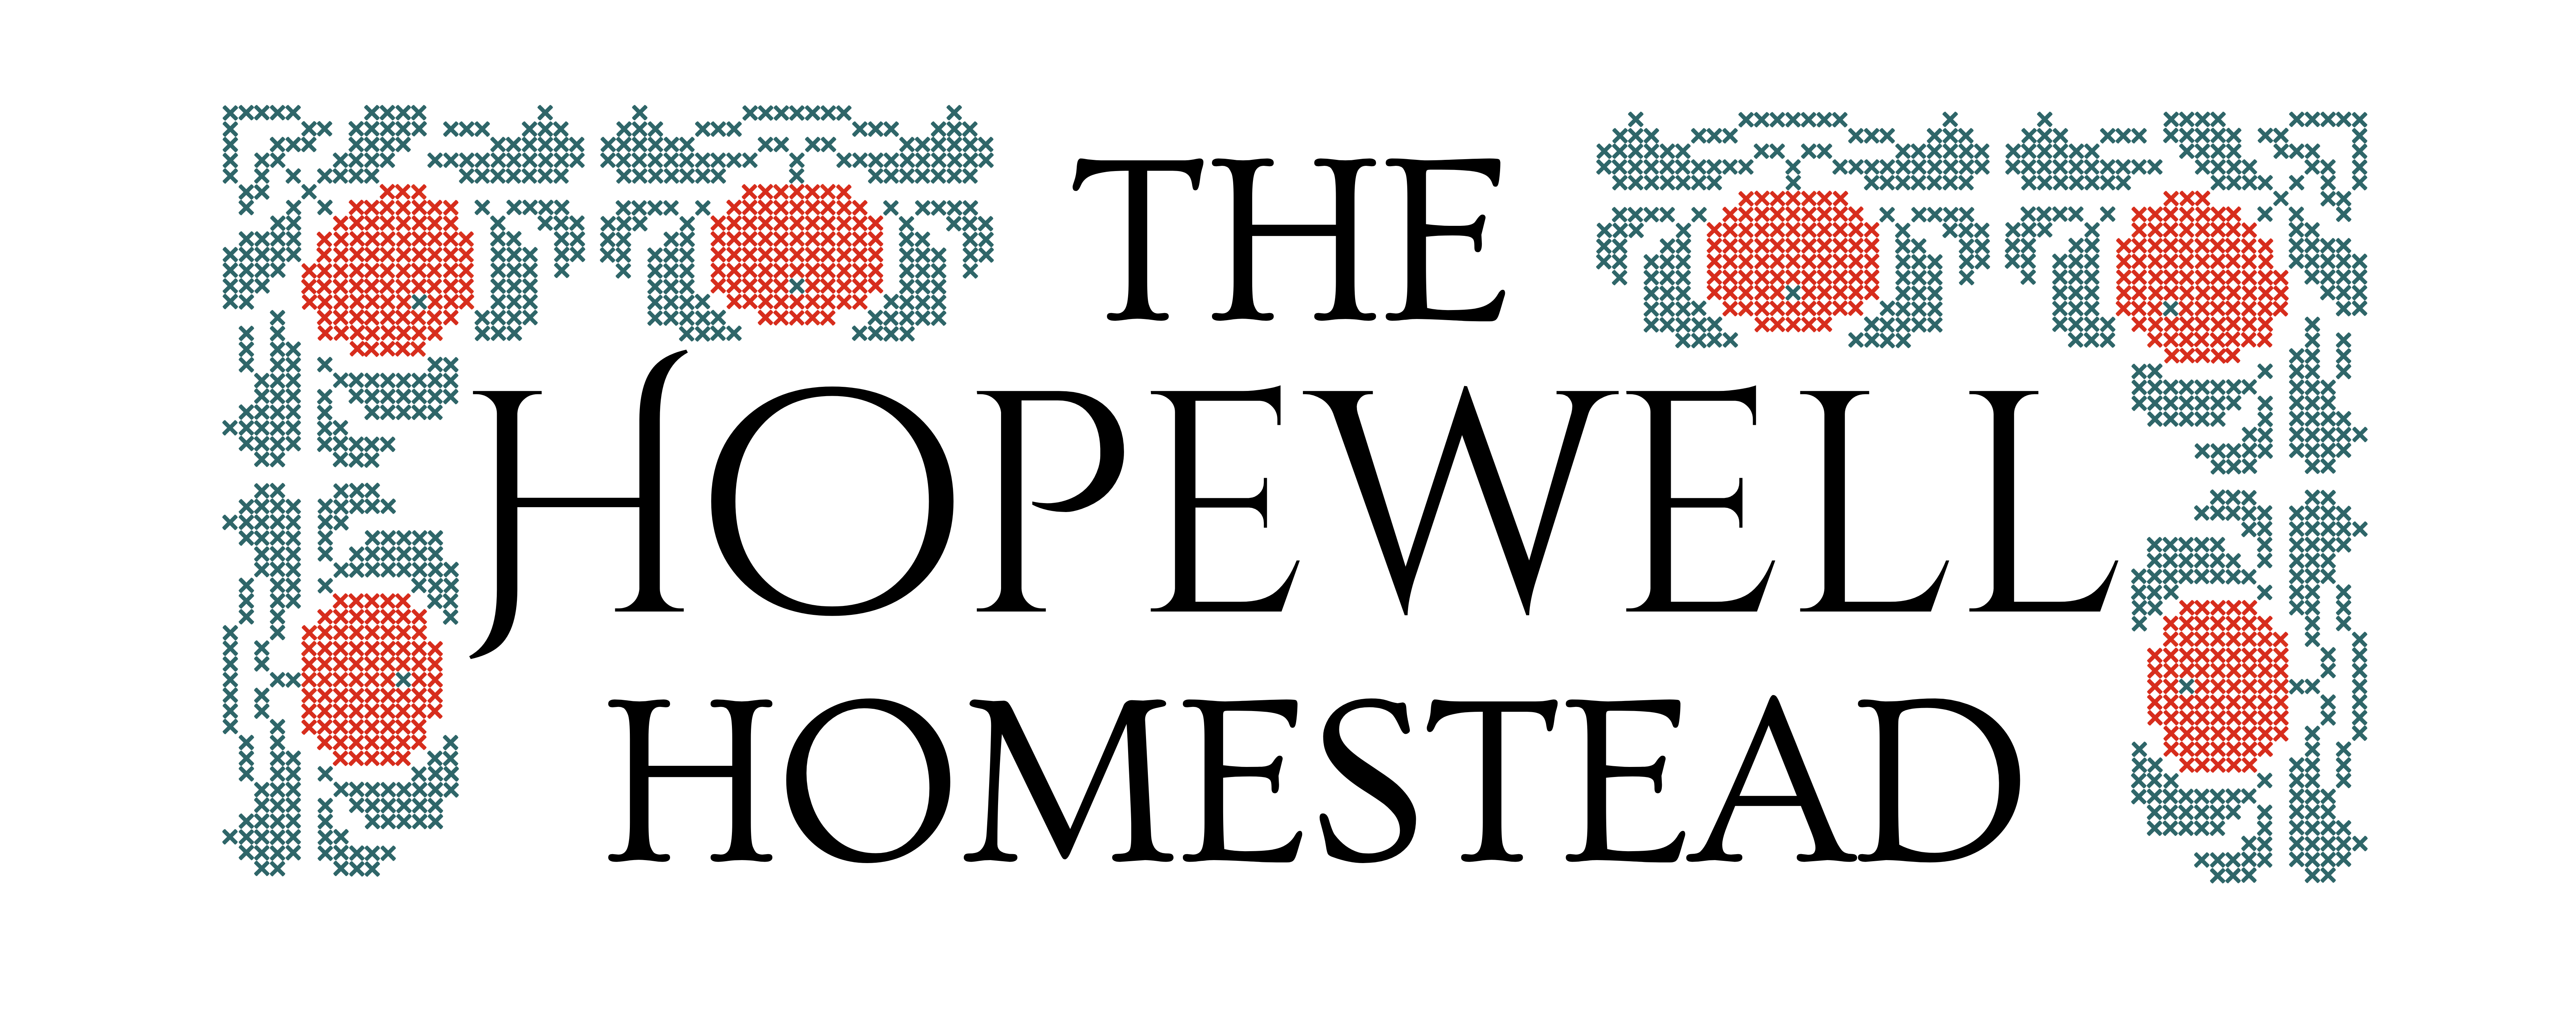 The Hopewell Homestead